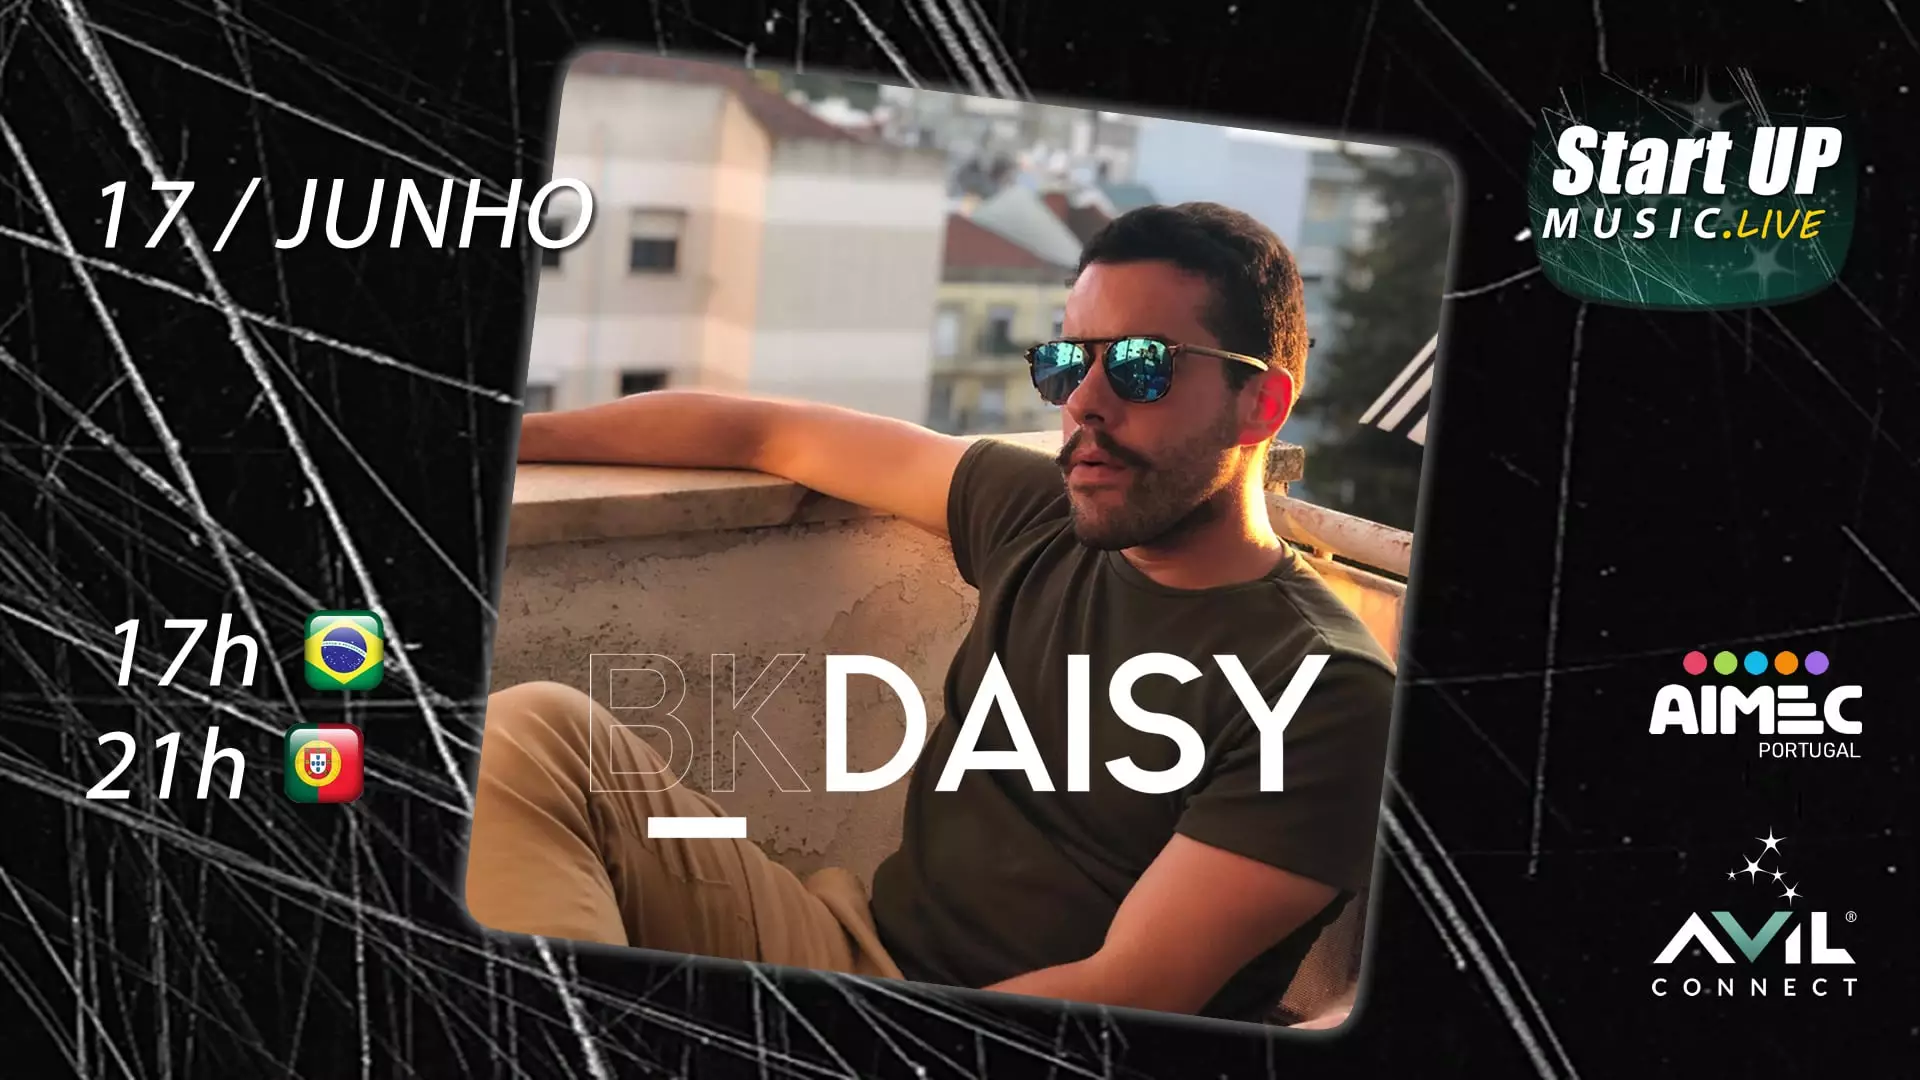 Startup Music Live DJ Black Daisy